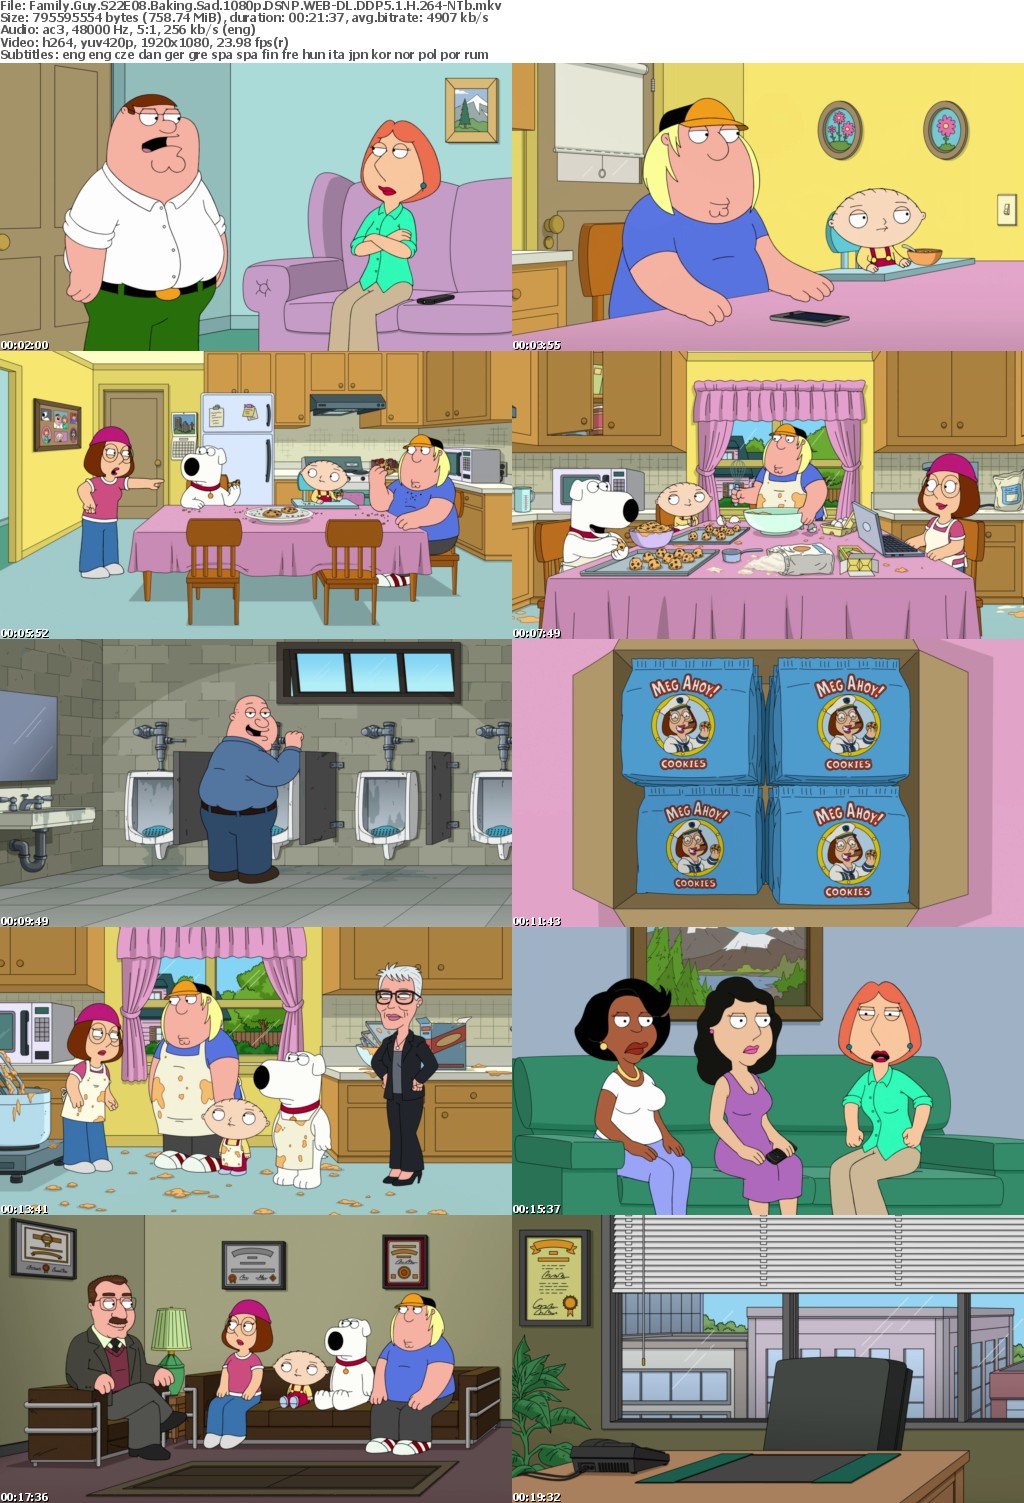 Family Guy S22E08 Baking Sad 1080p DSNP WEB-DL DDP5 1 H 264-NTb